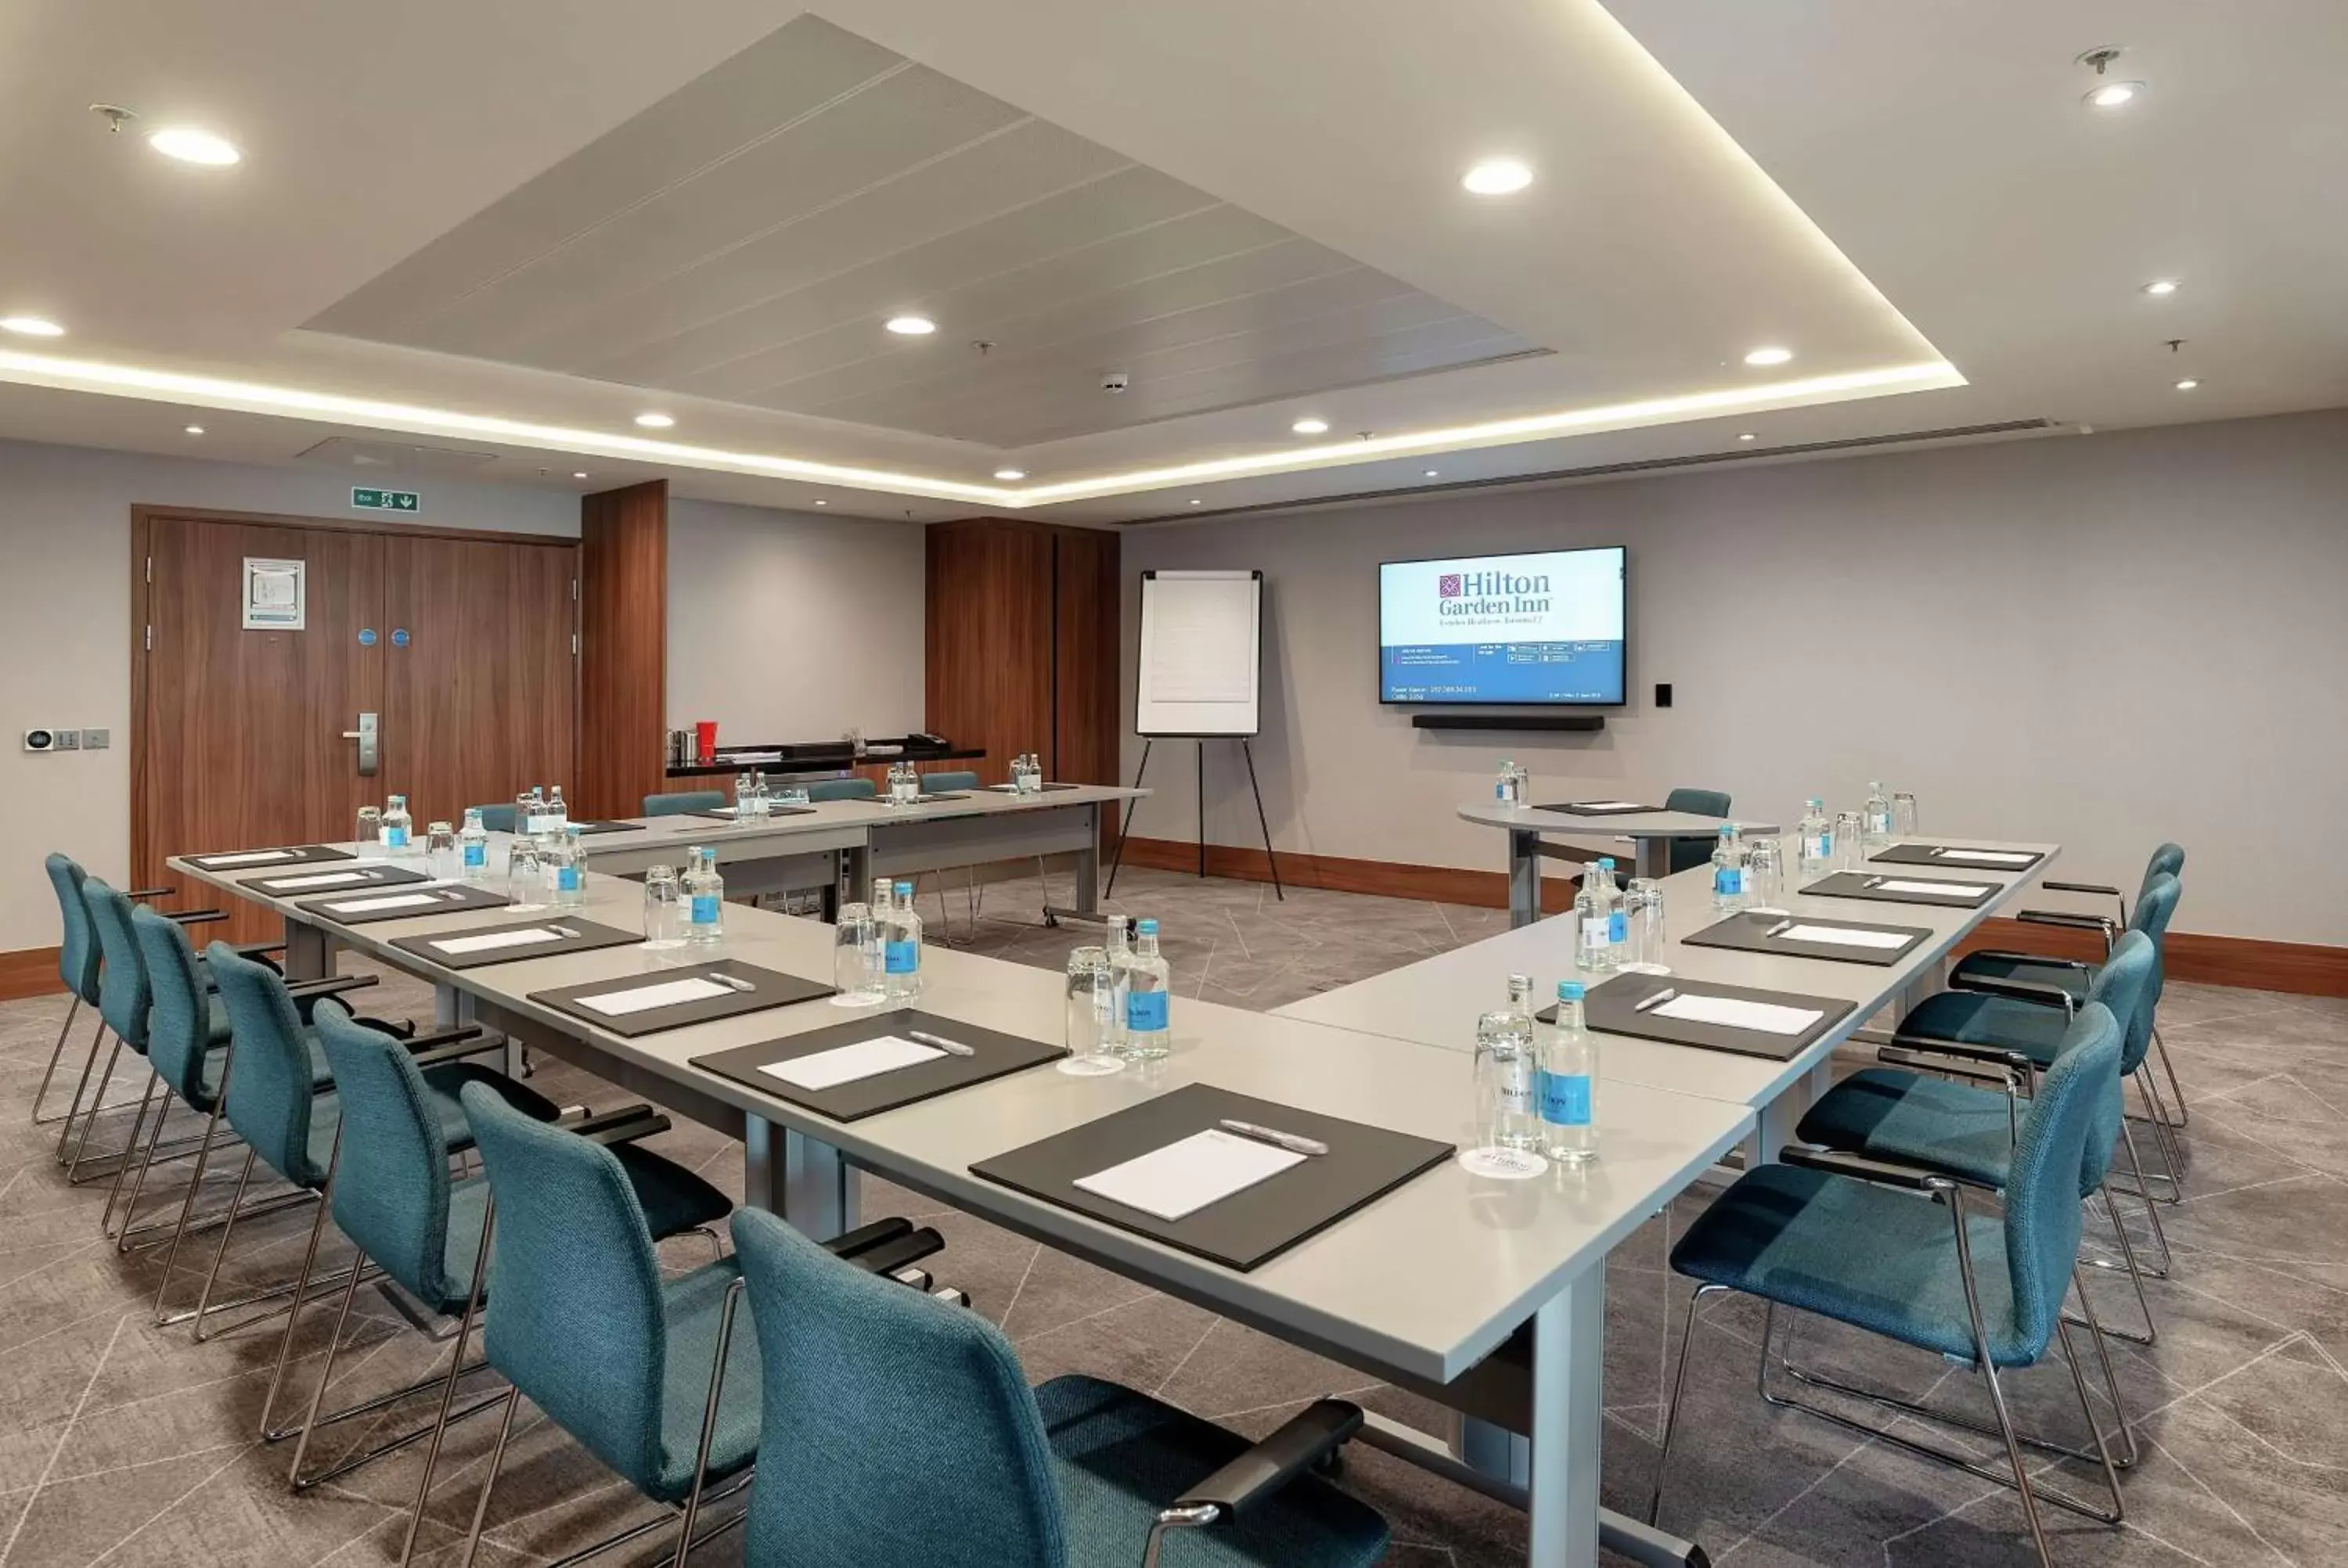 Meeting/conference room in Hilton Garden Inn London Heathrow Terminal 2 and 3